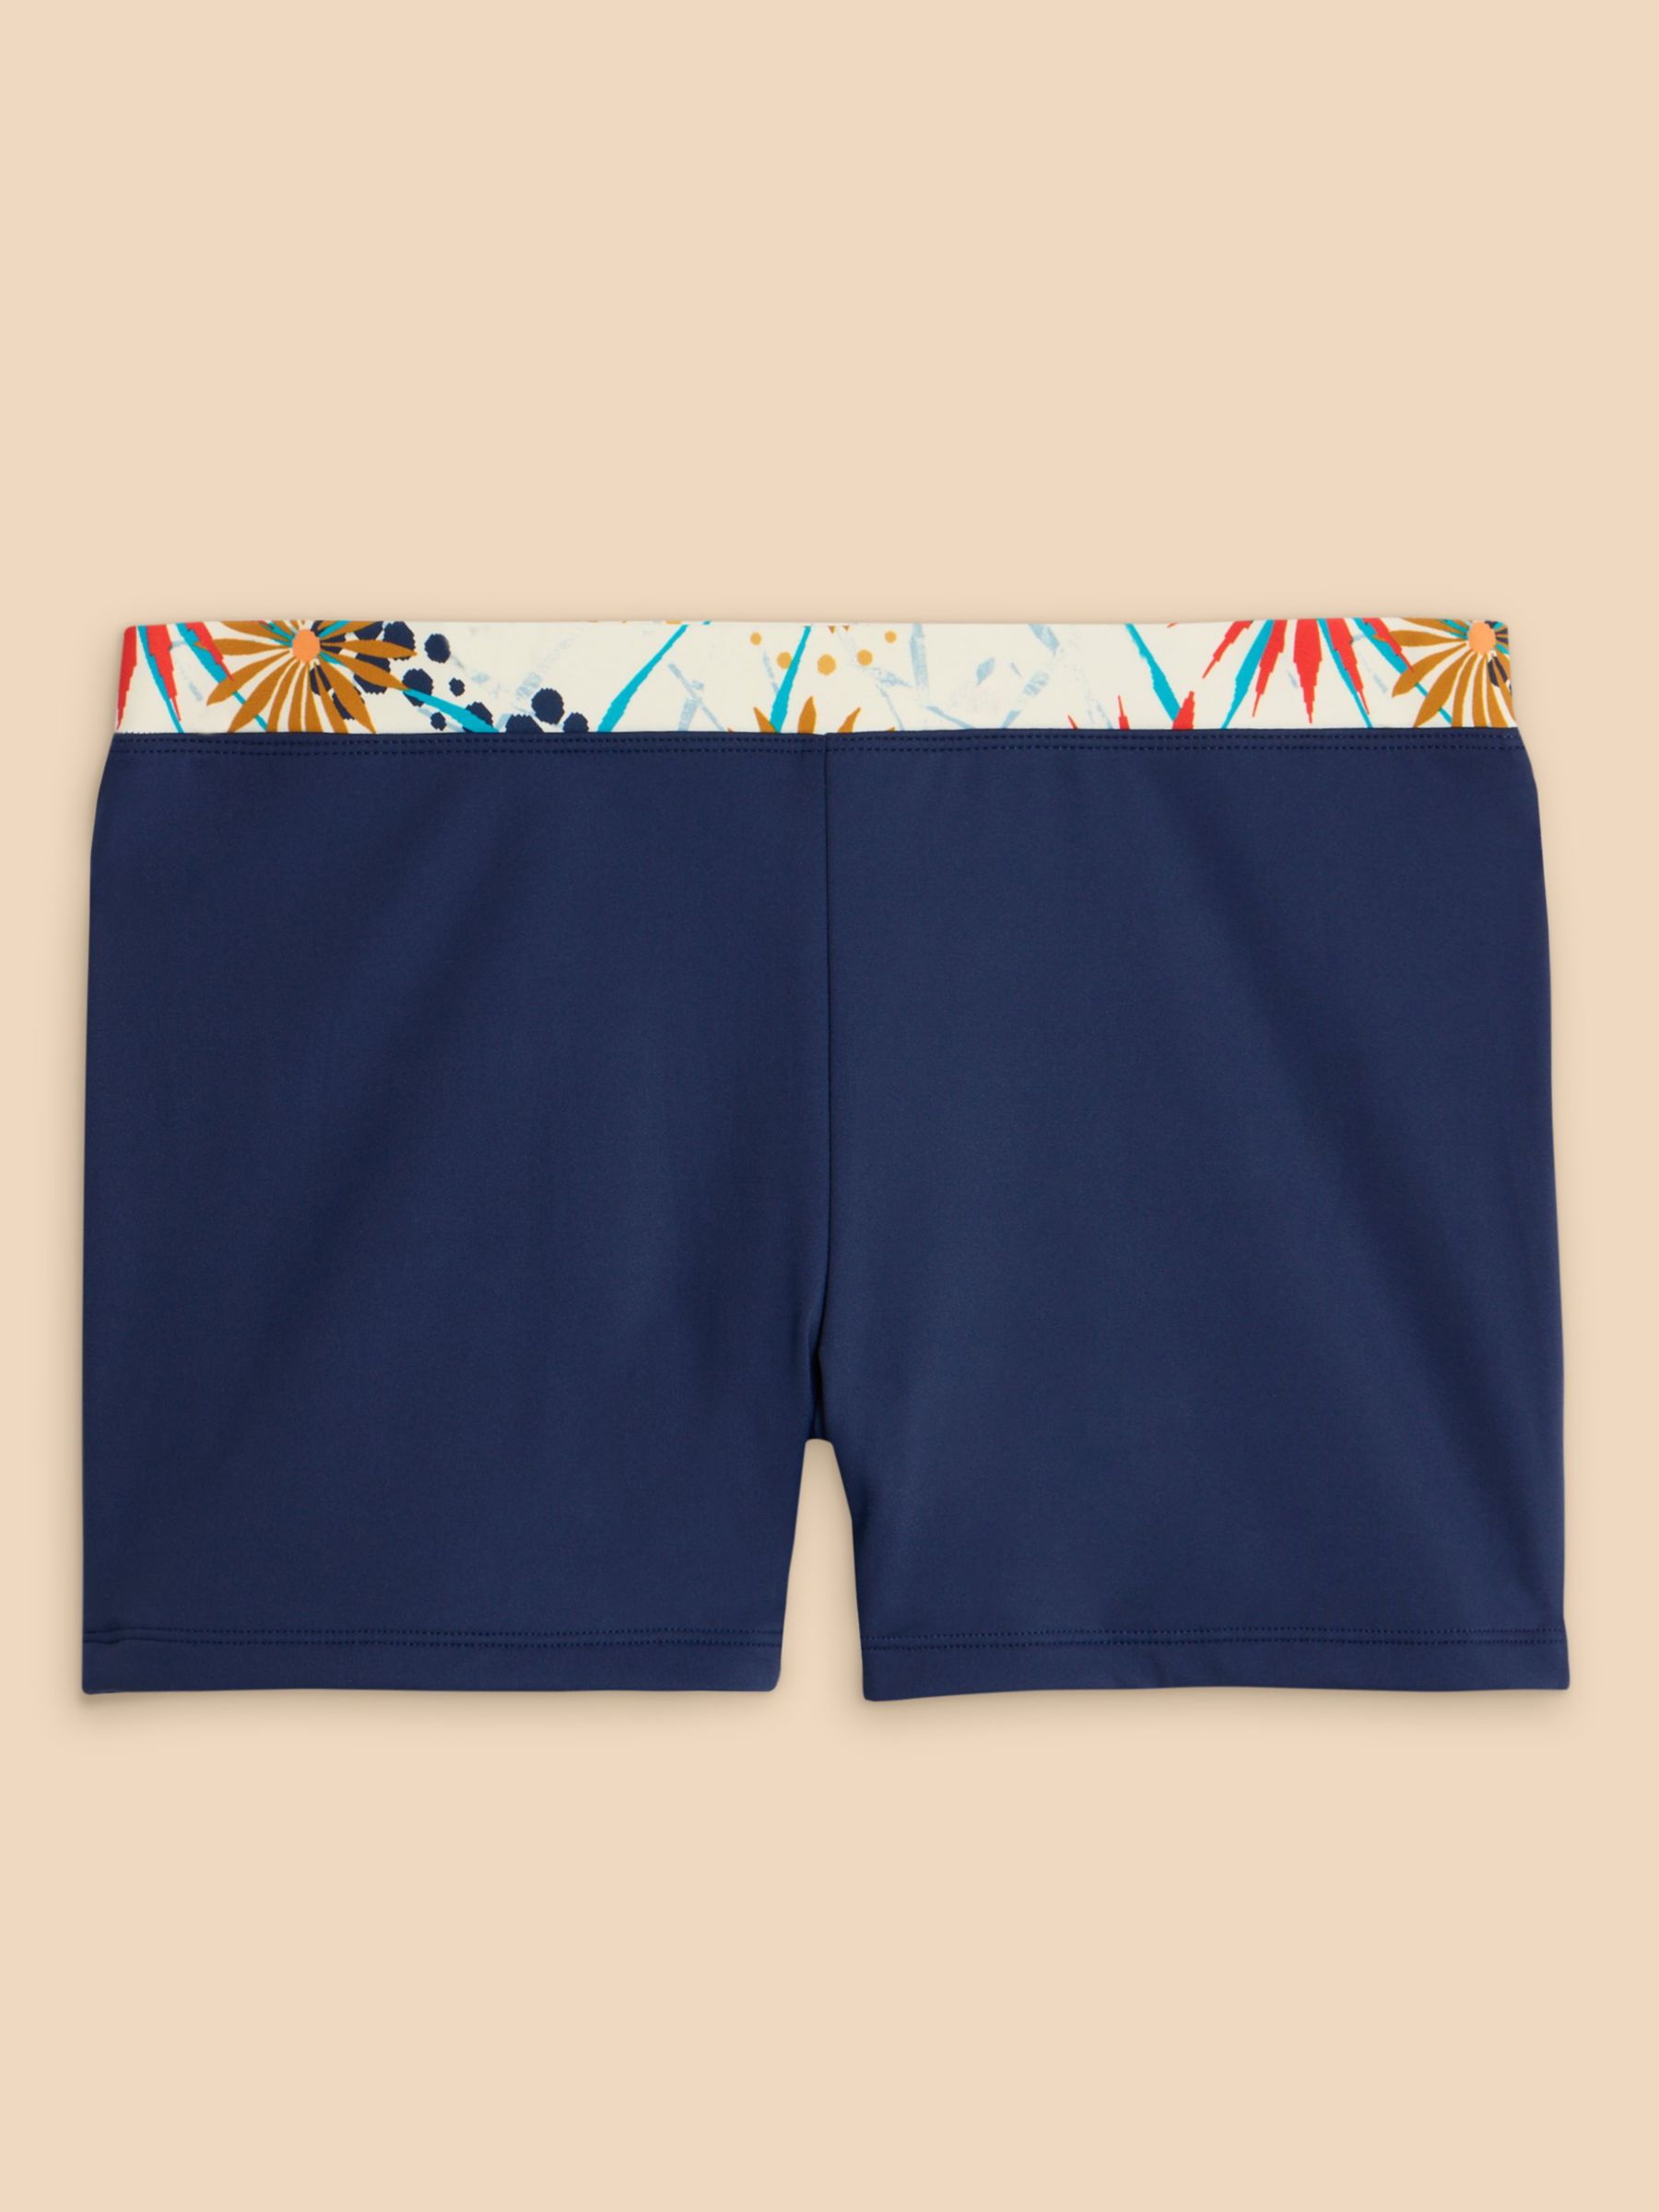 Buy White Stuff Bay Swim Shorts, Navy/Multi Online at johnlewis.com